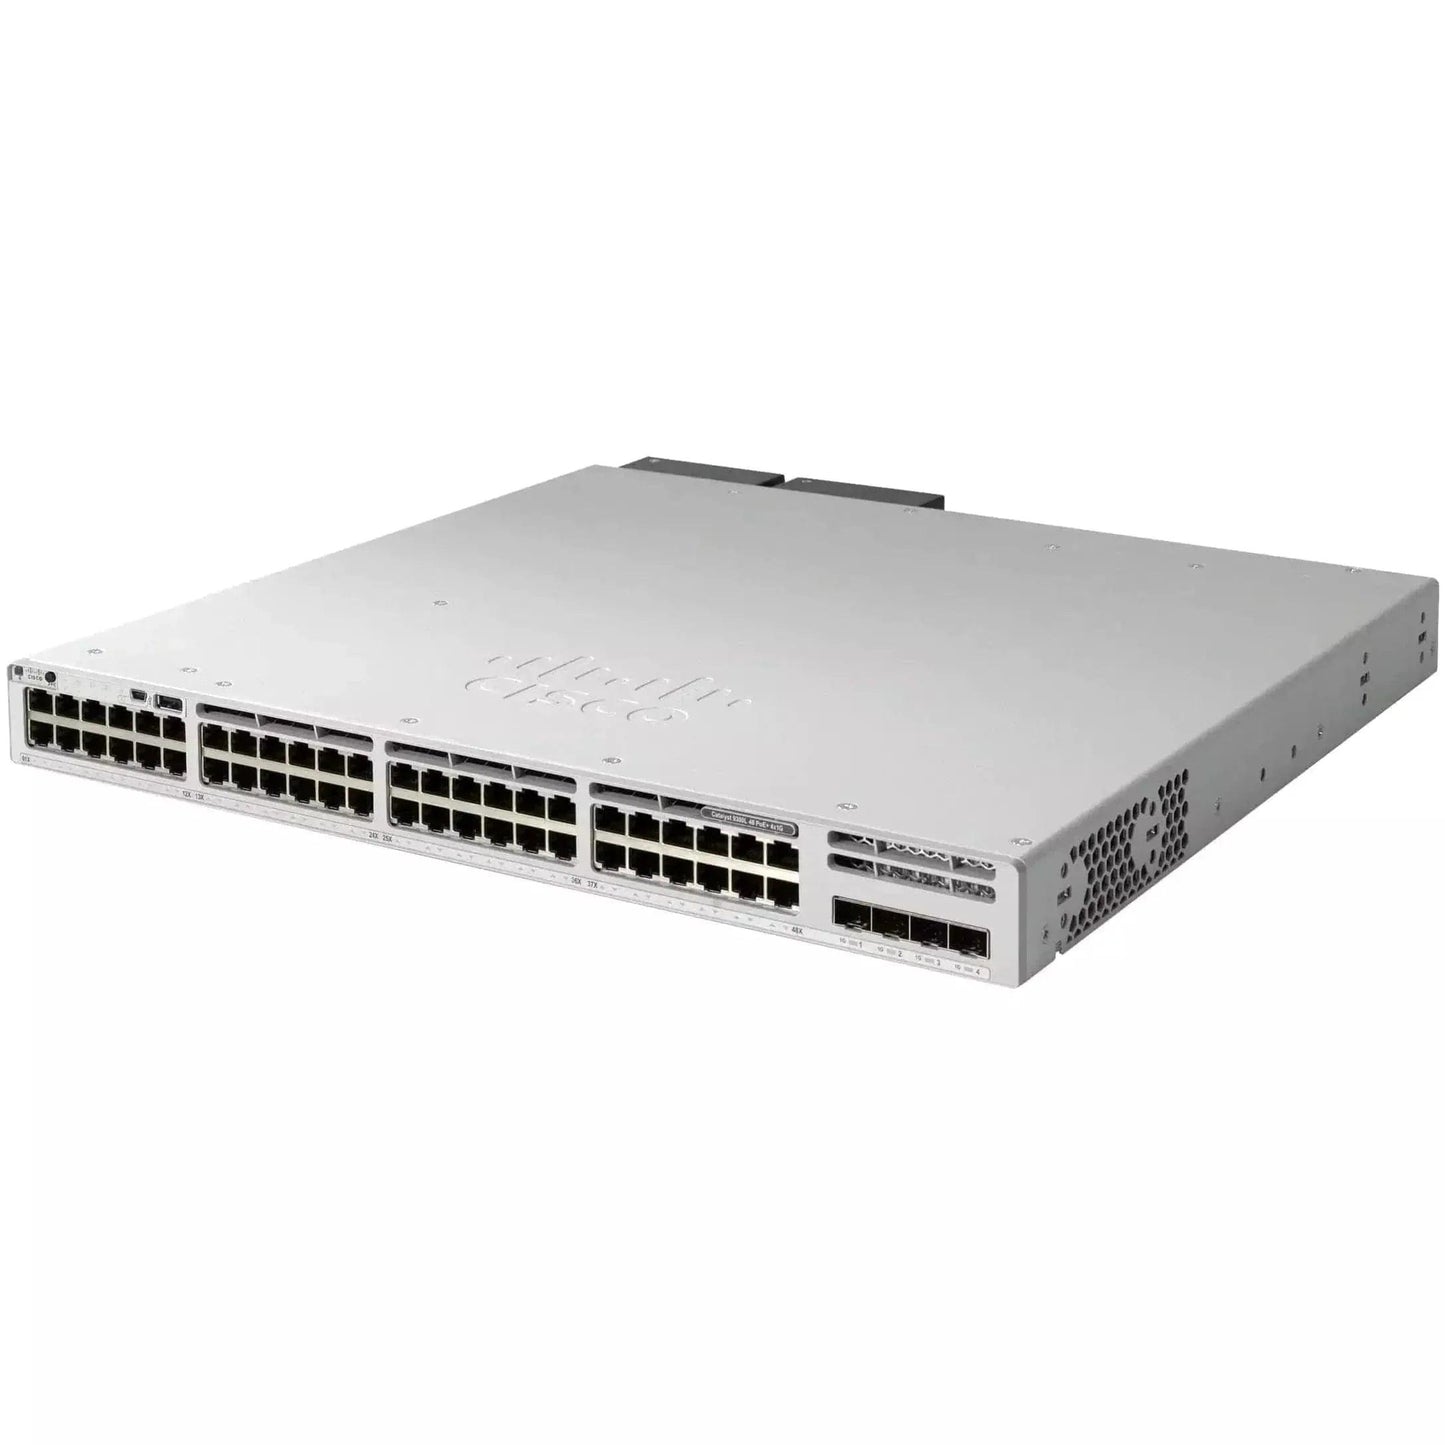 Cisco Catalyst 9300 48-port 12x mGig (100M/1G/2.5G/5G/10G) + 36x 10M/100M/1G copper with fixed 2x 40G QSFP uplinks, UPOE, Network Advantage - C9300L-48UXG-2Q-A - Refurbished - C9300L-48UXG-2Q-A-R - Reef Telecom